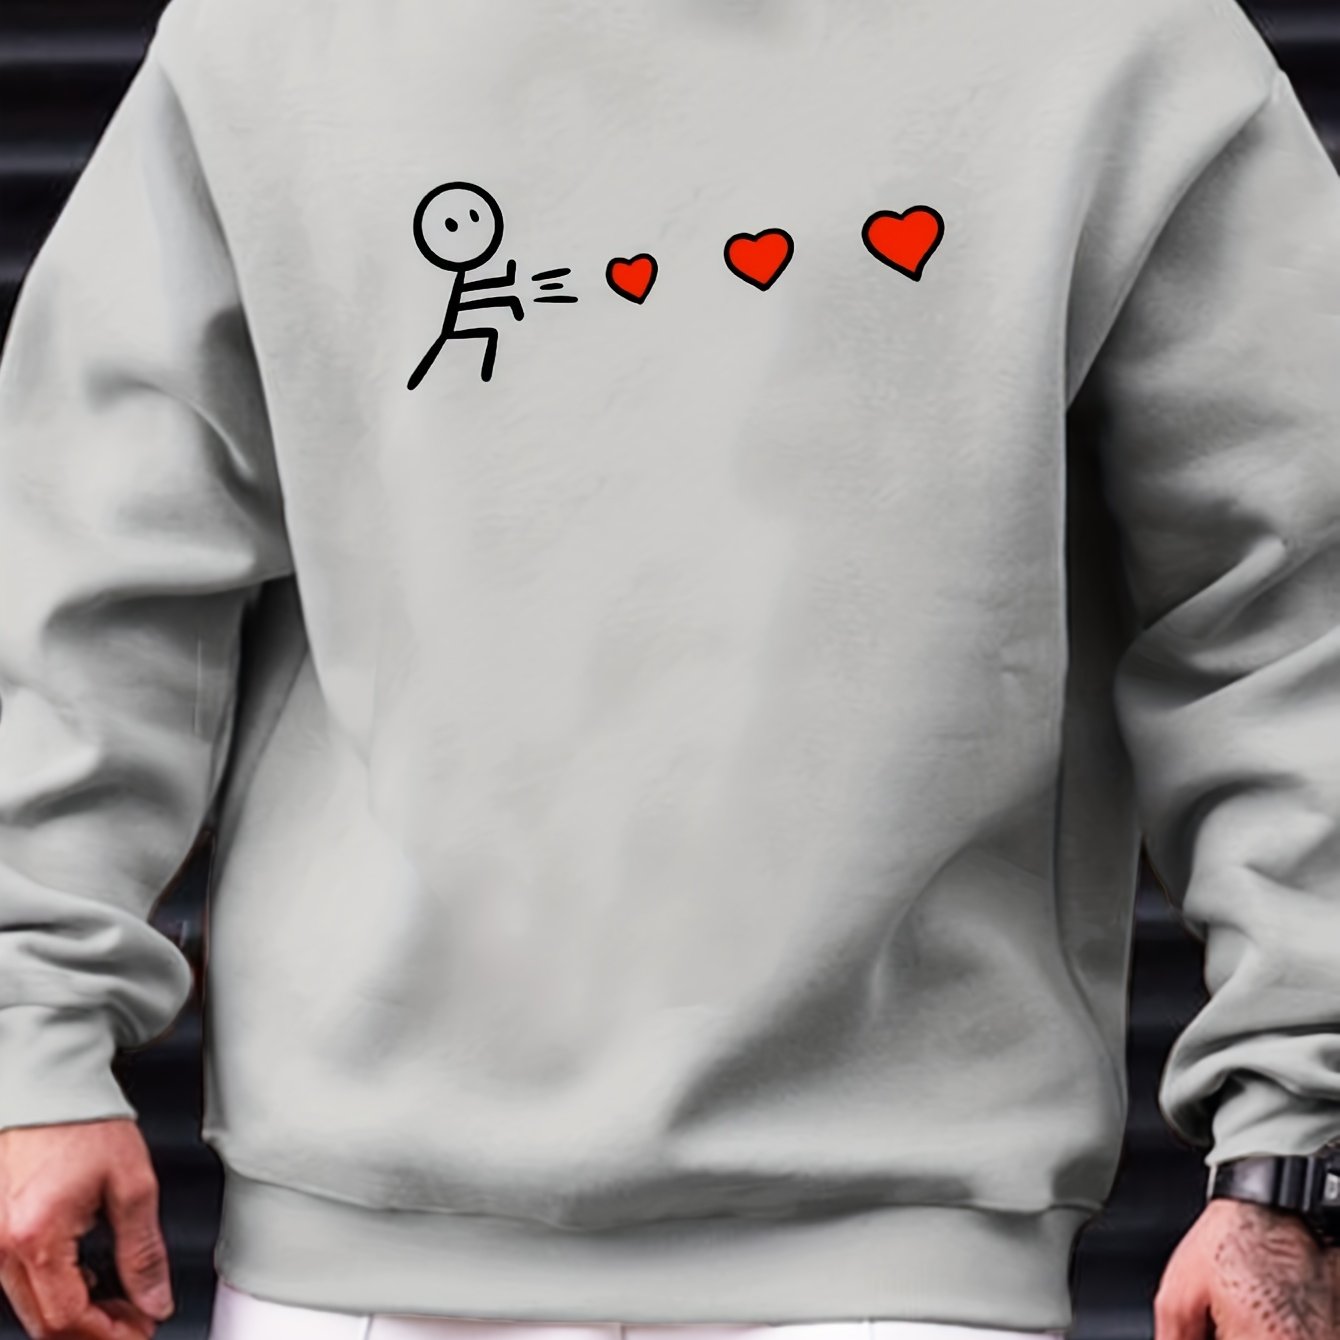 Little Hearts Print Men's Graphic Round Neck Sweatshirt, Loose Trendy Pullover, Men's Clothing For Autumn Winter